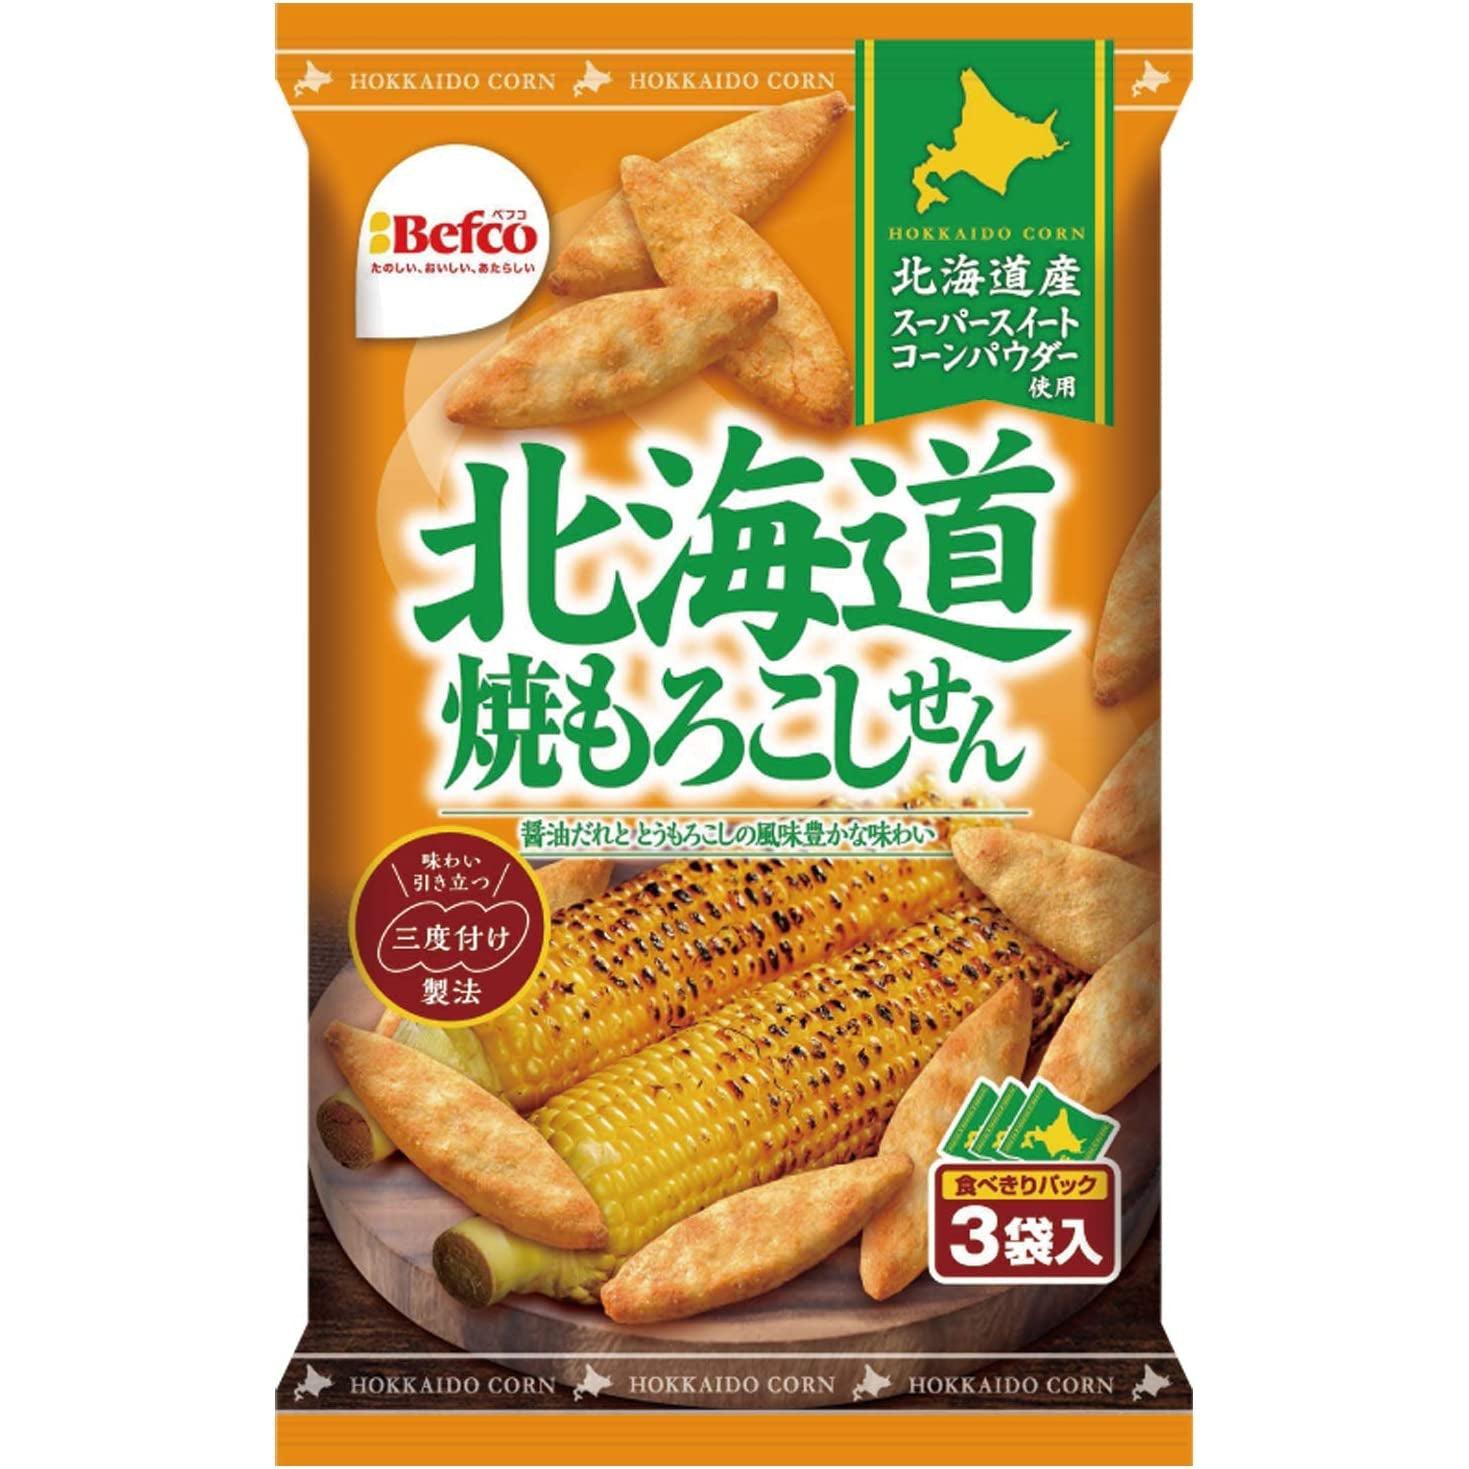 Befco Senbei Rice Crackers Hokkaido Roasted Corn Flavor 54g (Pack of 6)-Japanese Taste